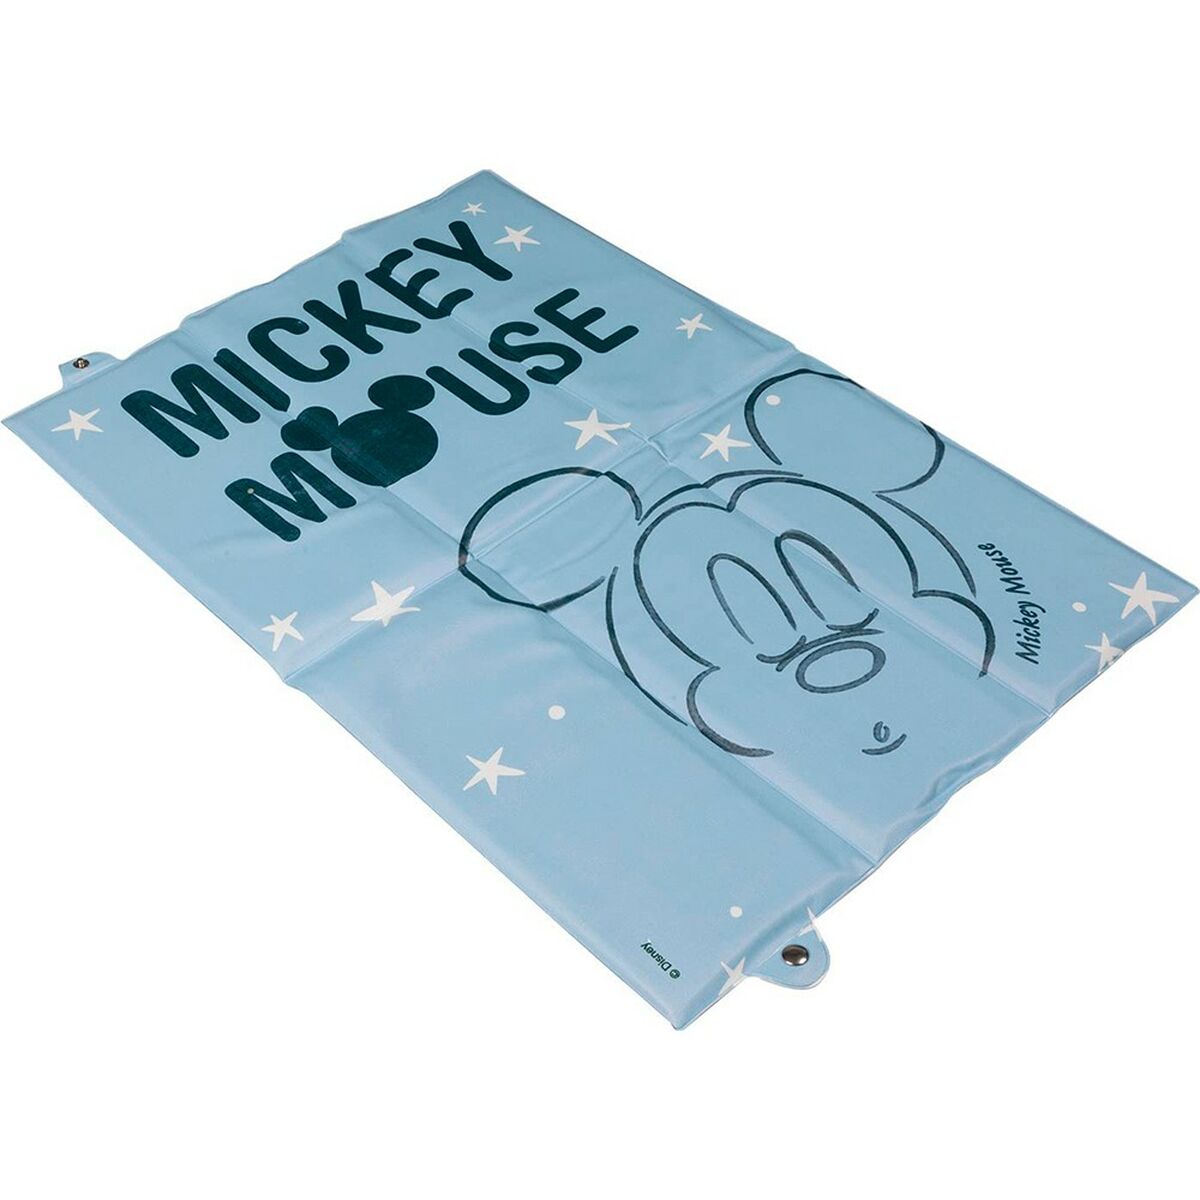 Changer Mickey Mouse CZ10345 Travel Blue 63 x 40 x 1 cm